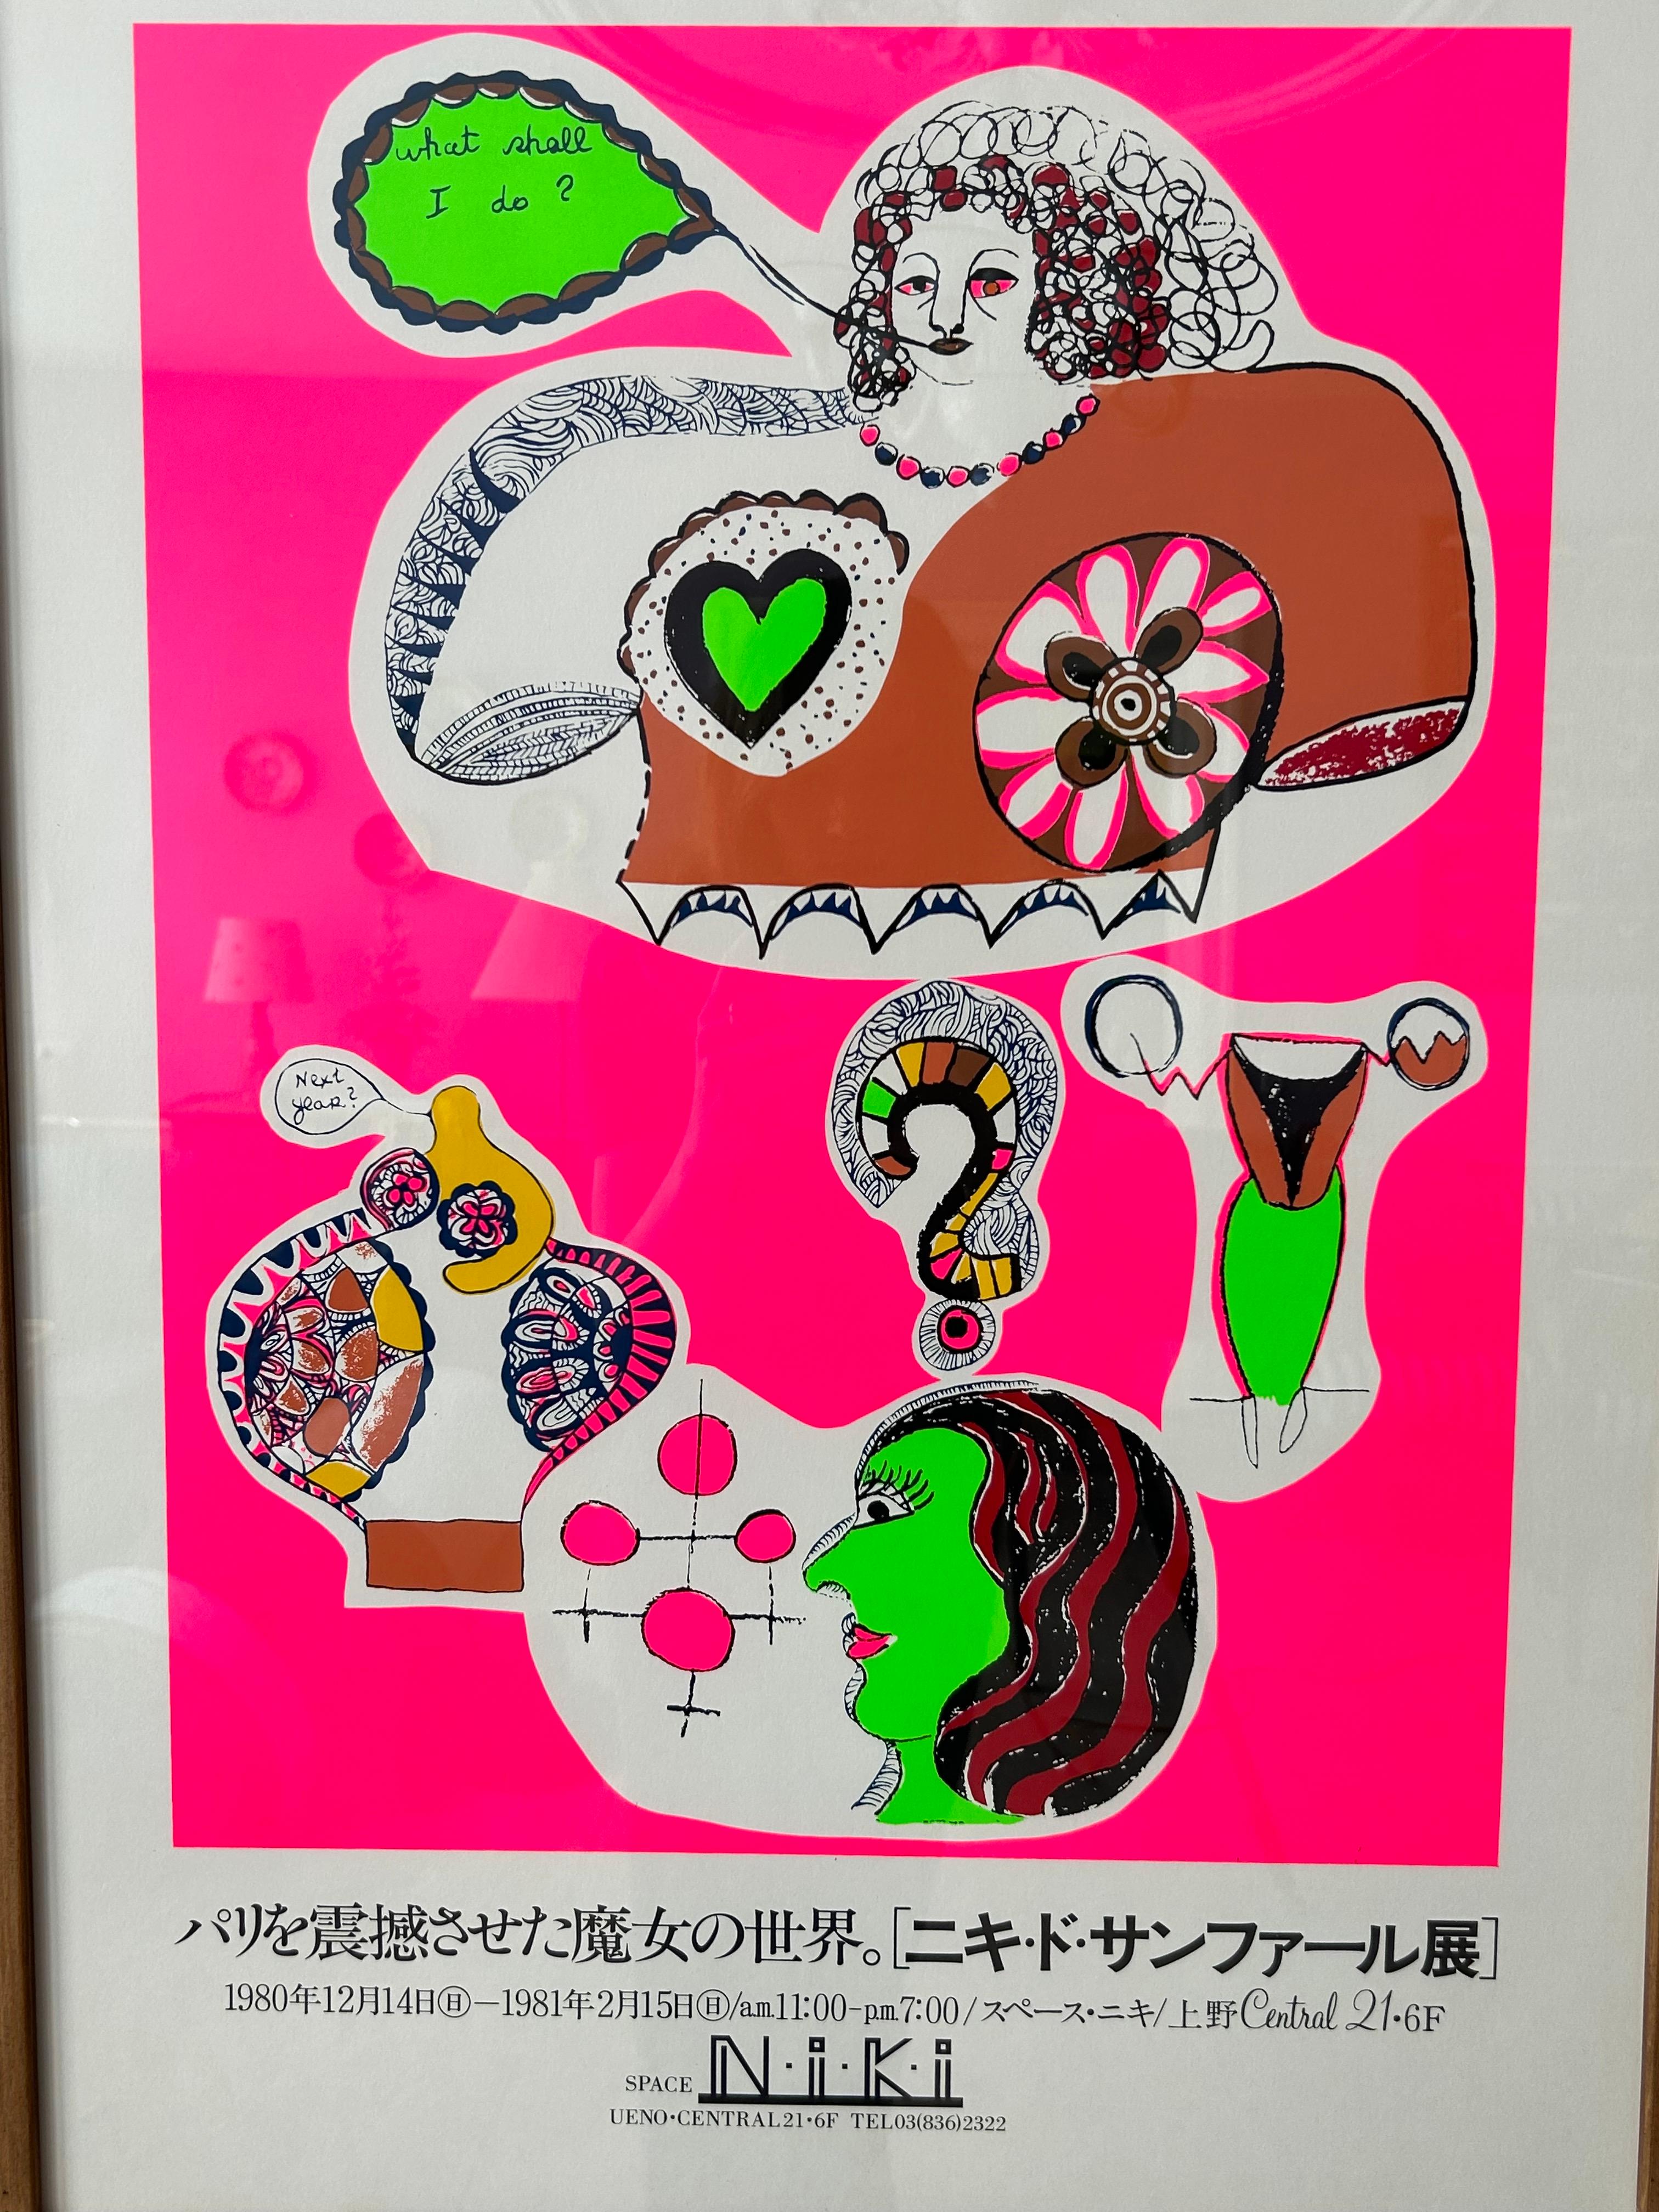 Vintage Niki de Saint Phalle “Space Niki” Ueno Exhibition Poster, Japan, 1980 In Good Condition For Sale In Copenhagen K, DK